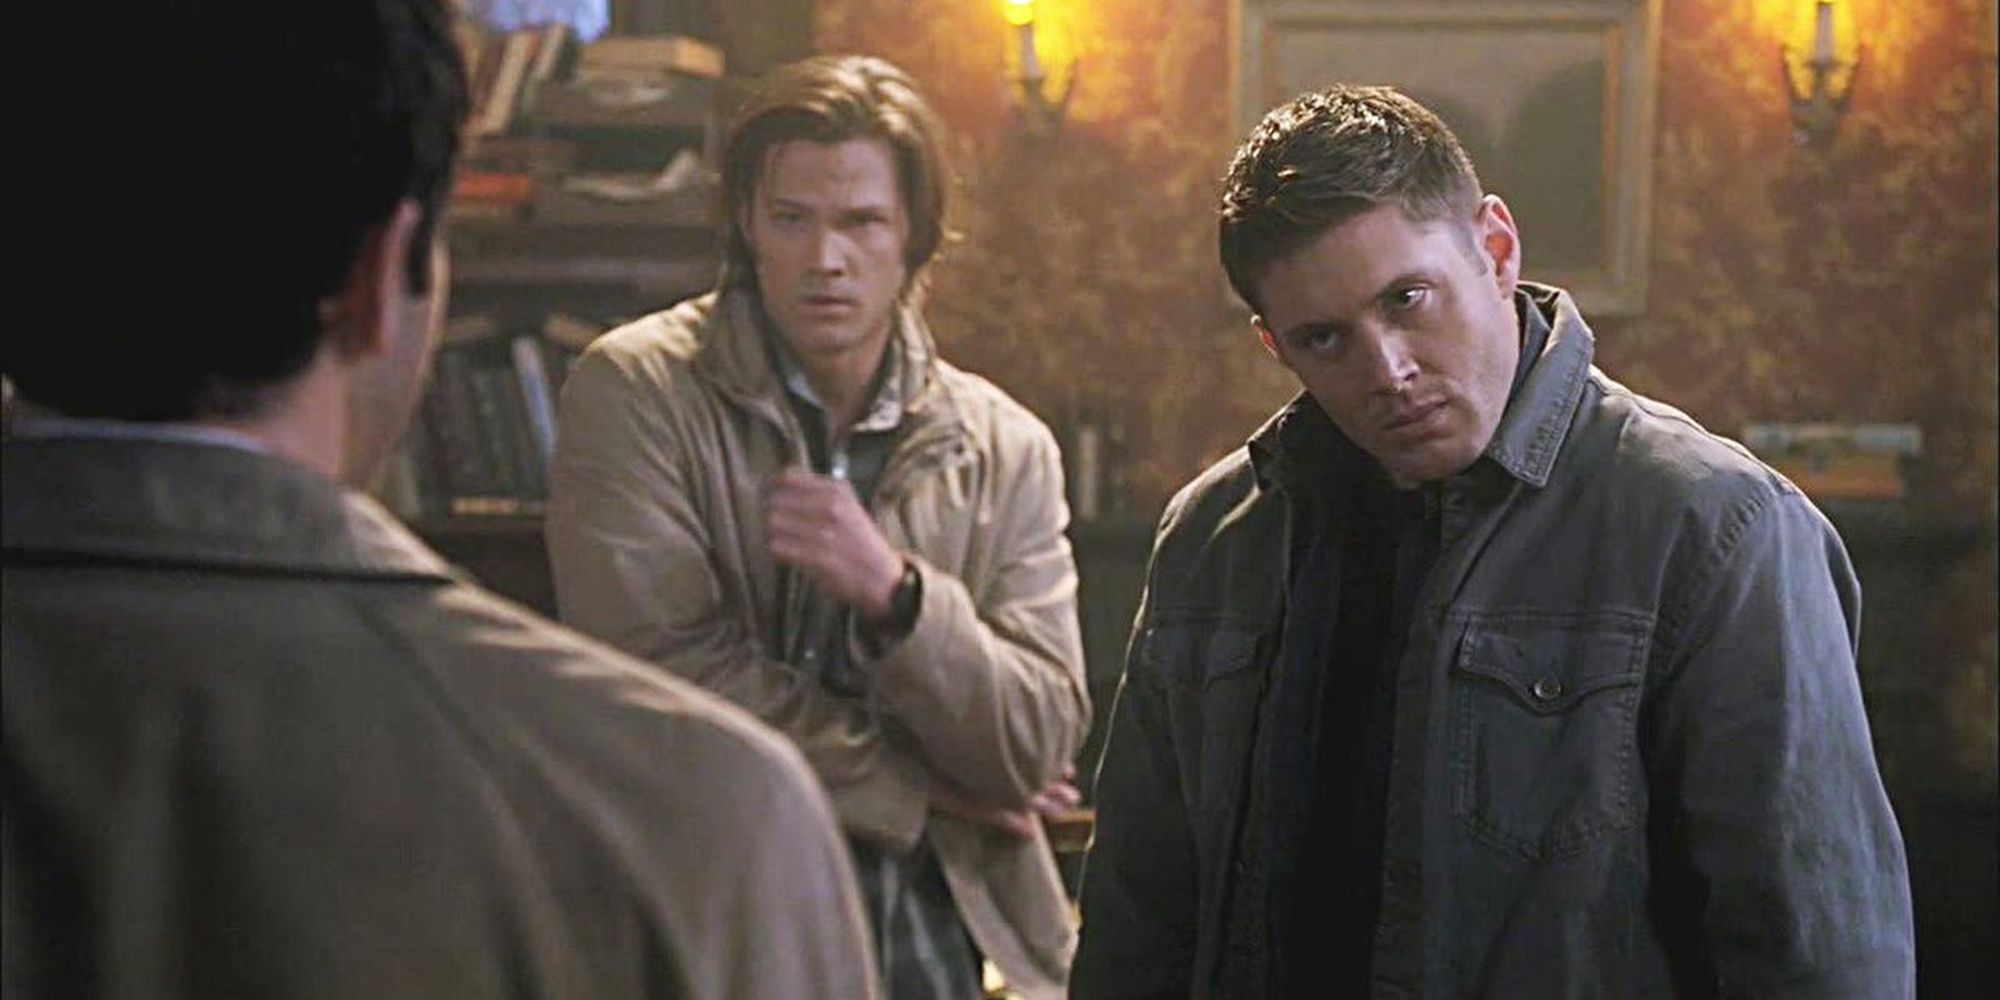 Dean (Jensen Ackles) and Sam (Jared PadaleckI) trying to act in Supernatural